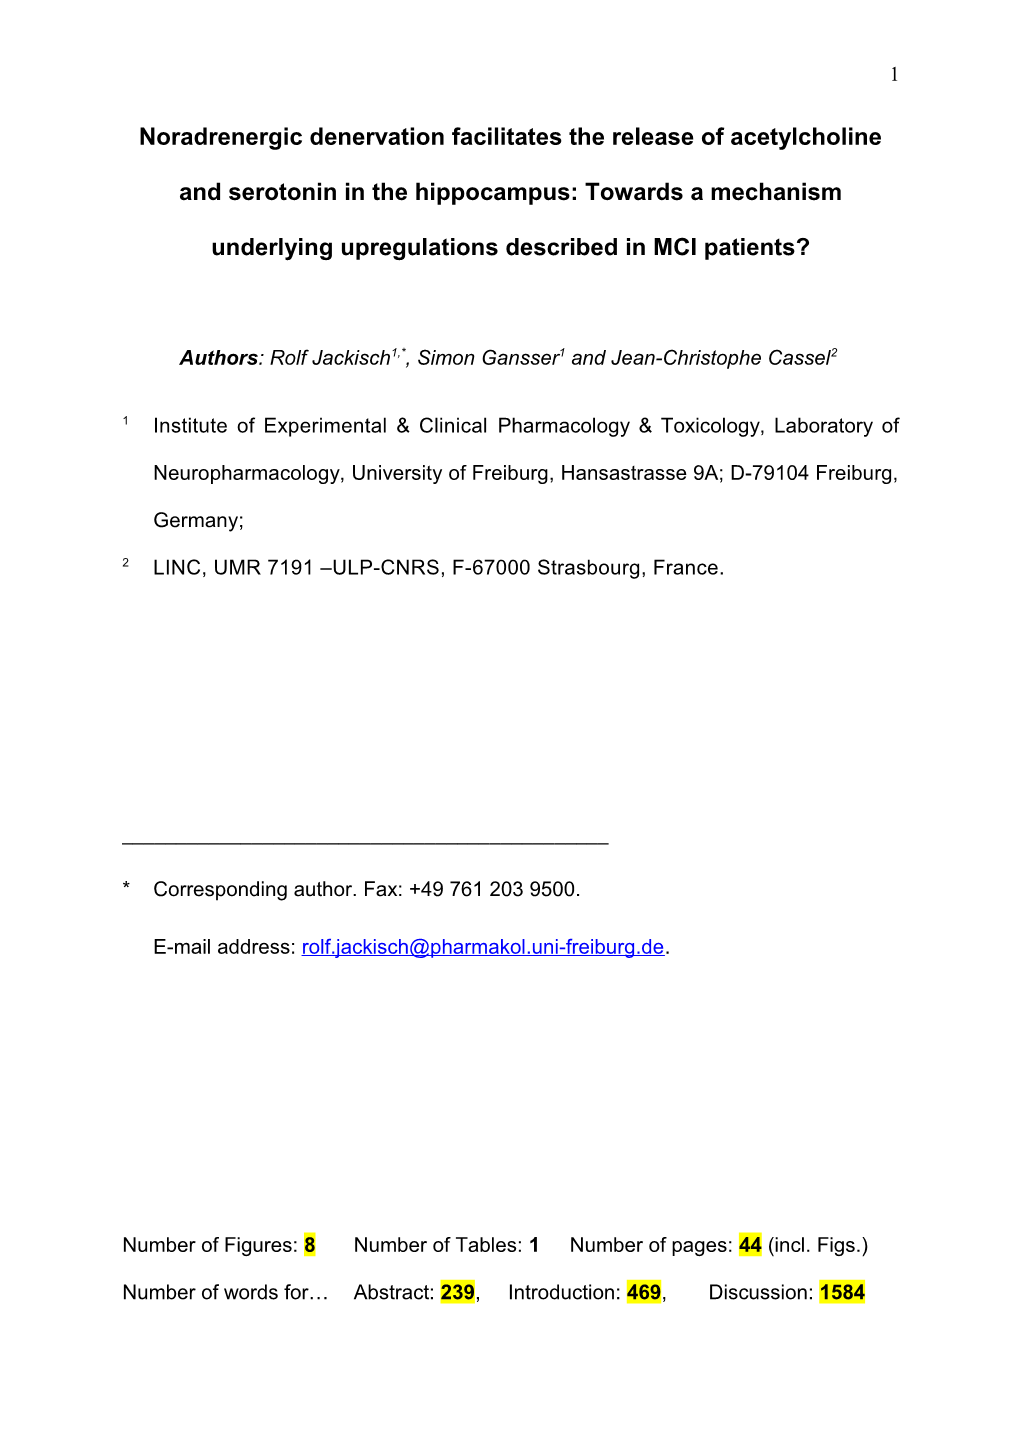 Selective Noradrenergic Denervation by N-2-Chlorethyl-N-Ethyl-2-Bromobenzylamin (DSP-4)